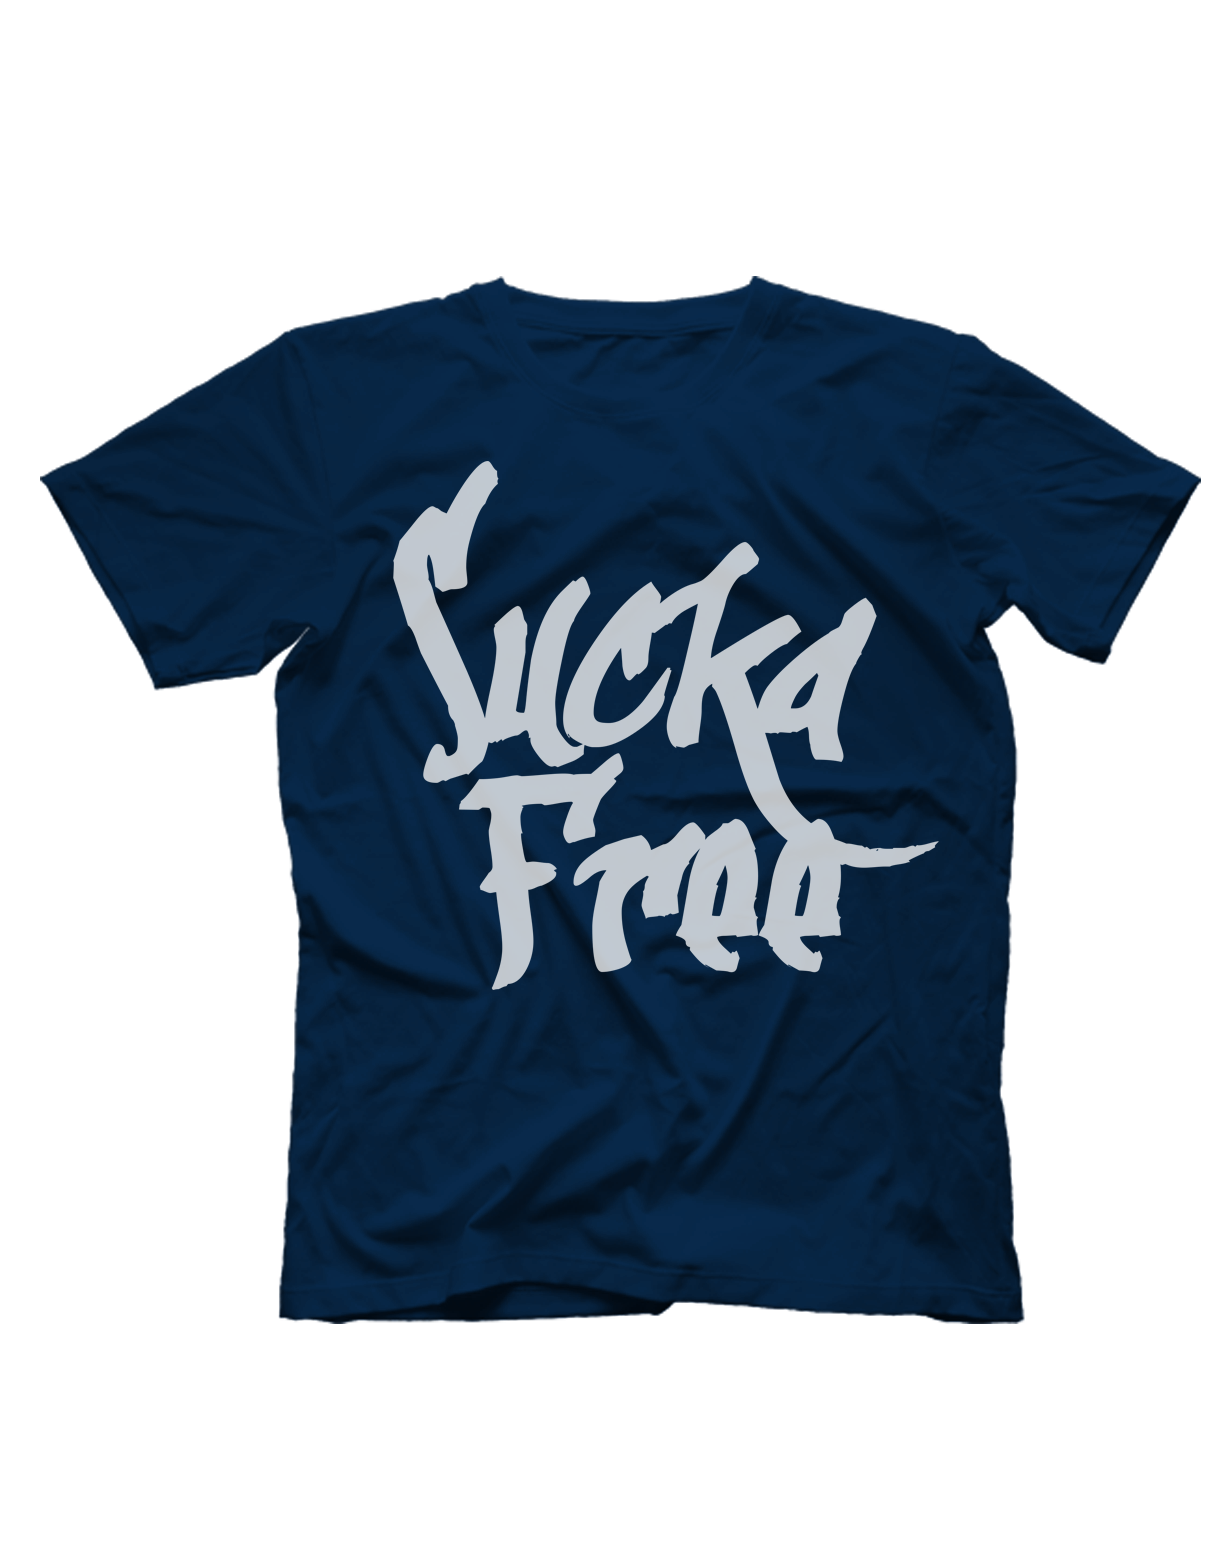 Sucka Free Short Sleeve T-shirt